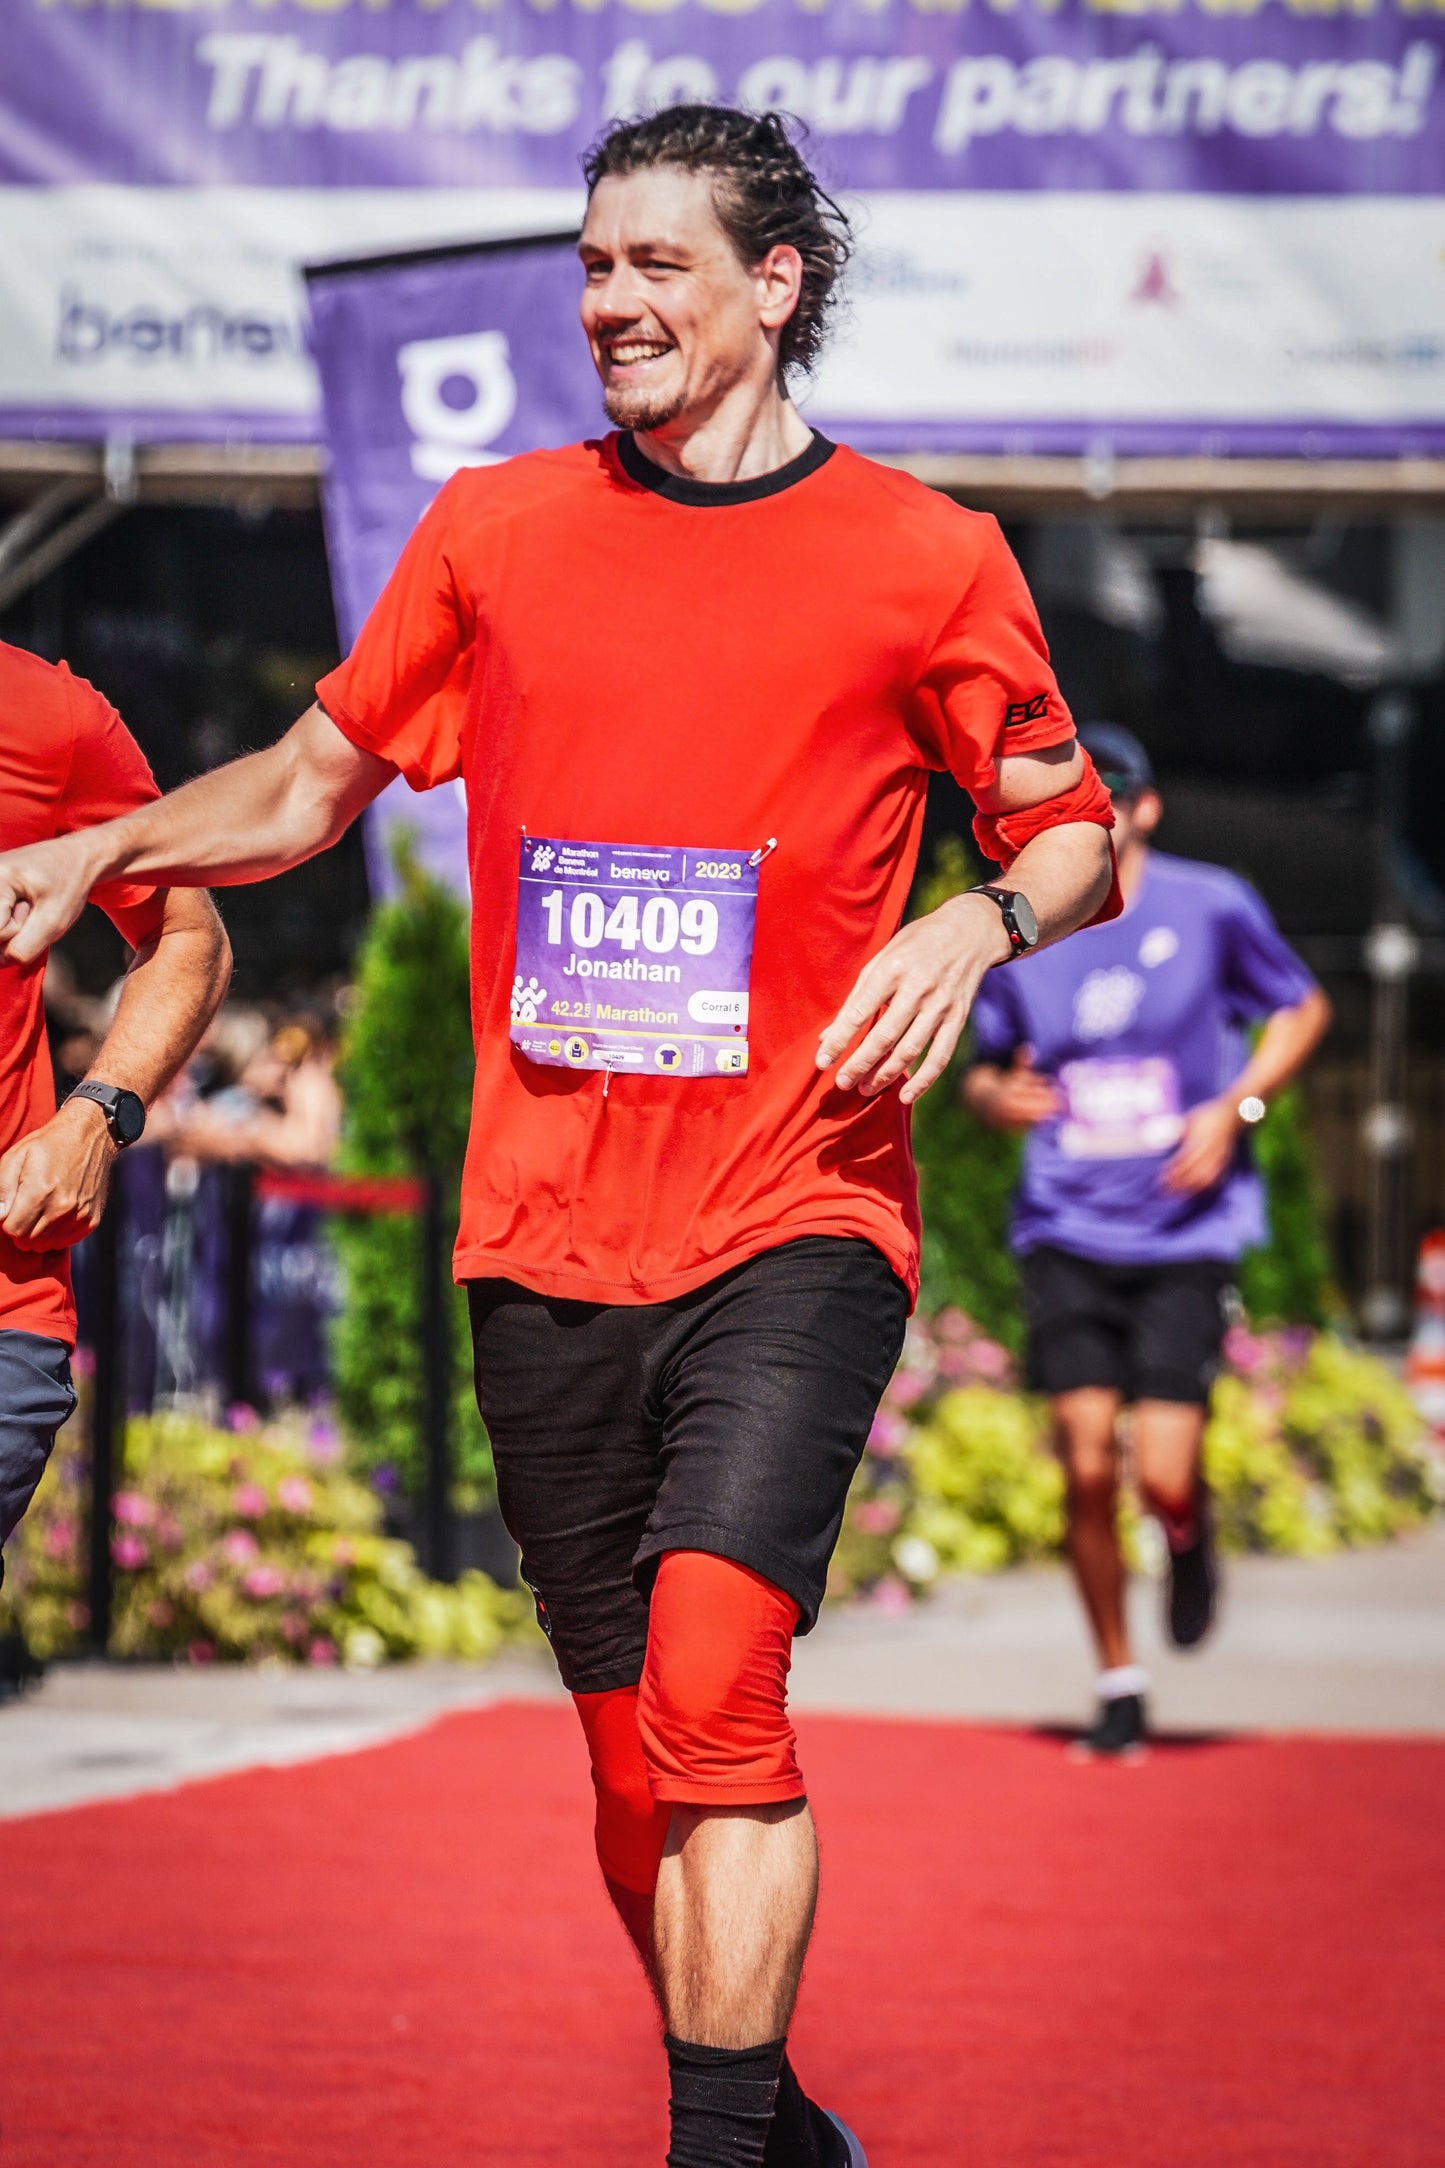 42.2 KM  MTL Marathon Red Bamboo T-Shirt